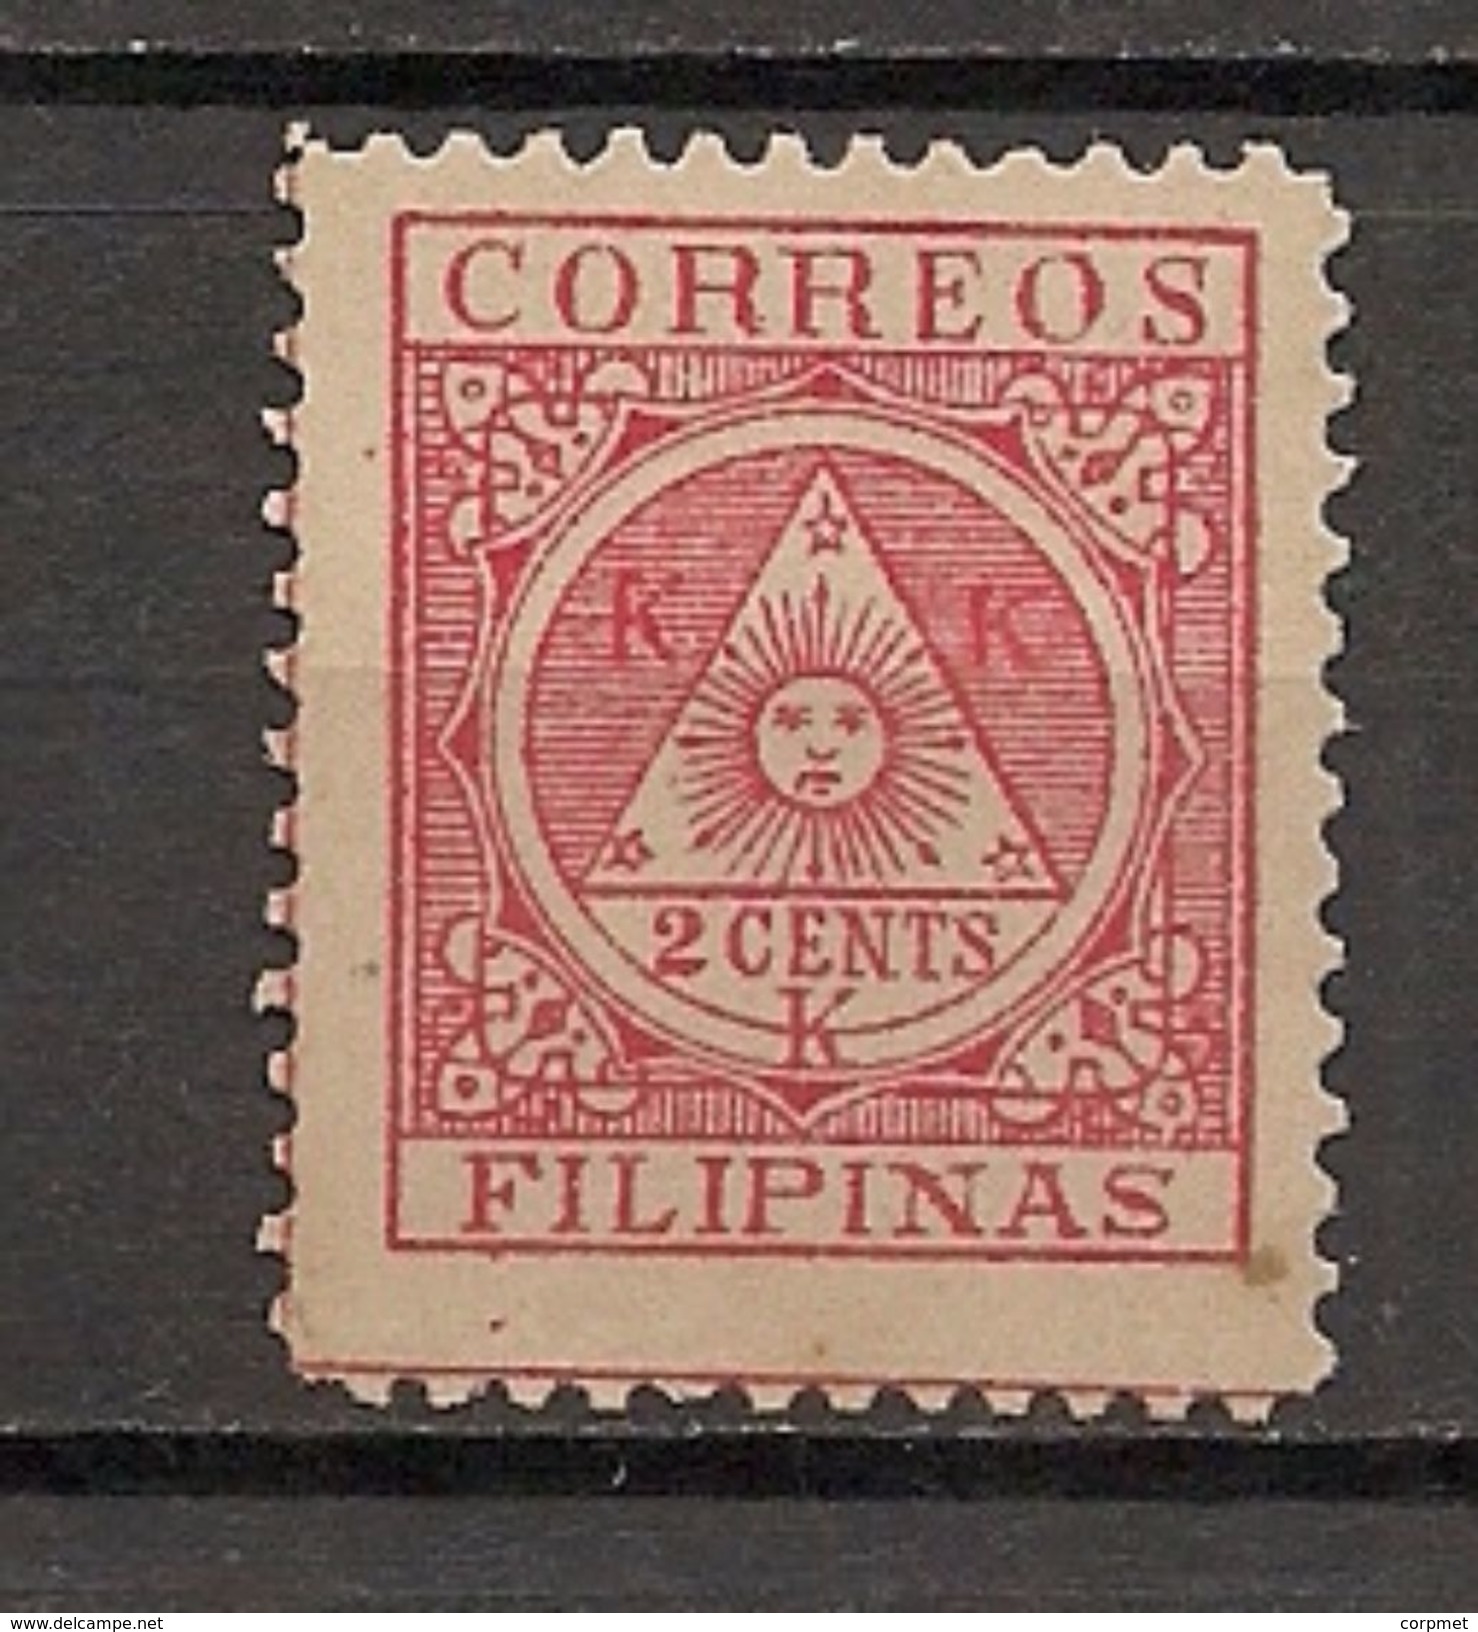 PHILIPPINE ISLANDS -  Gouvernement Révolutionnaire - Yvert 2 - MINT - Philippinen